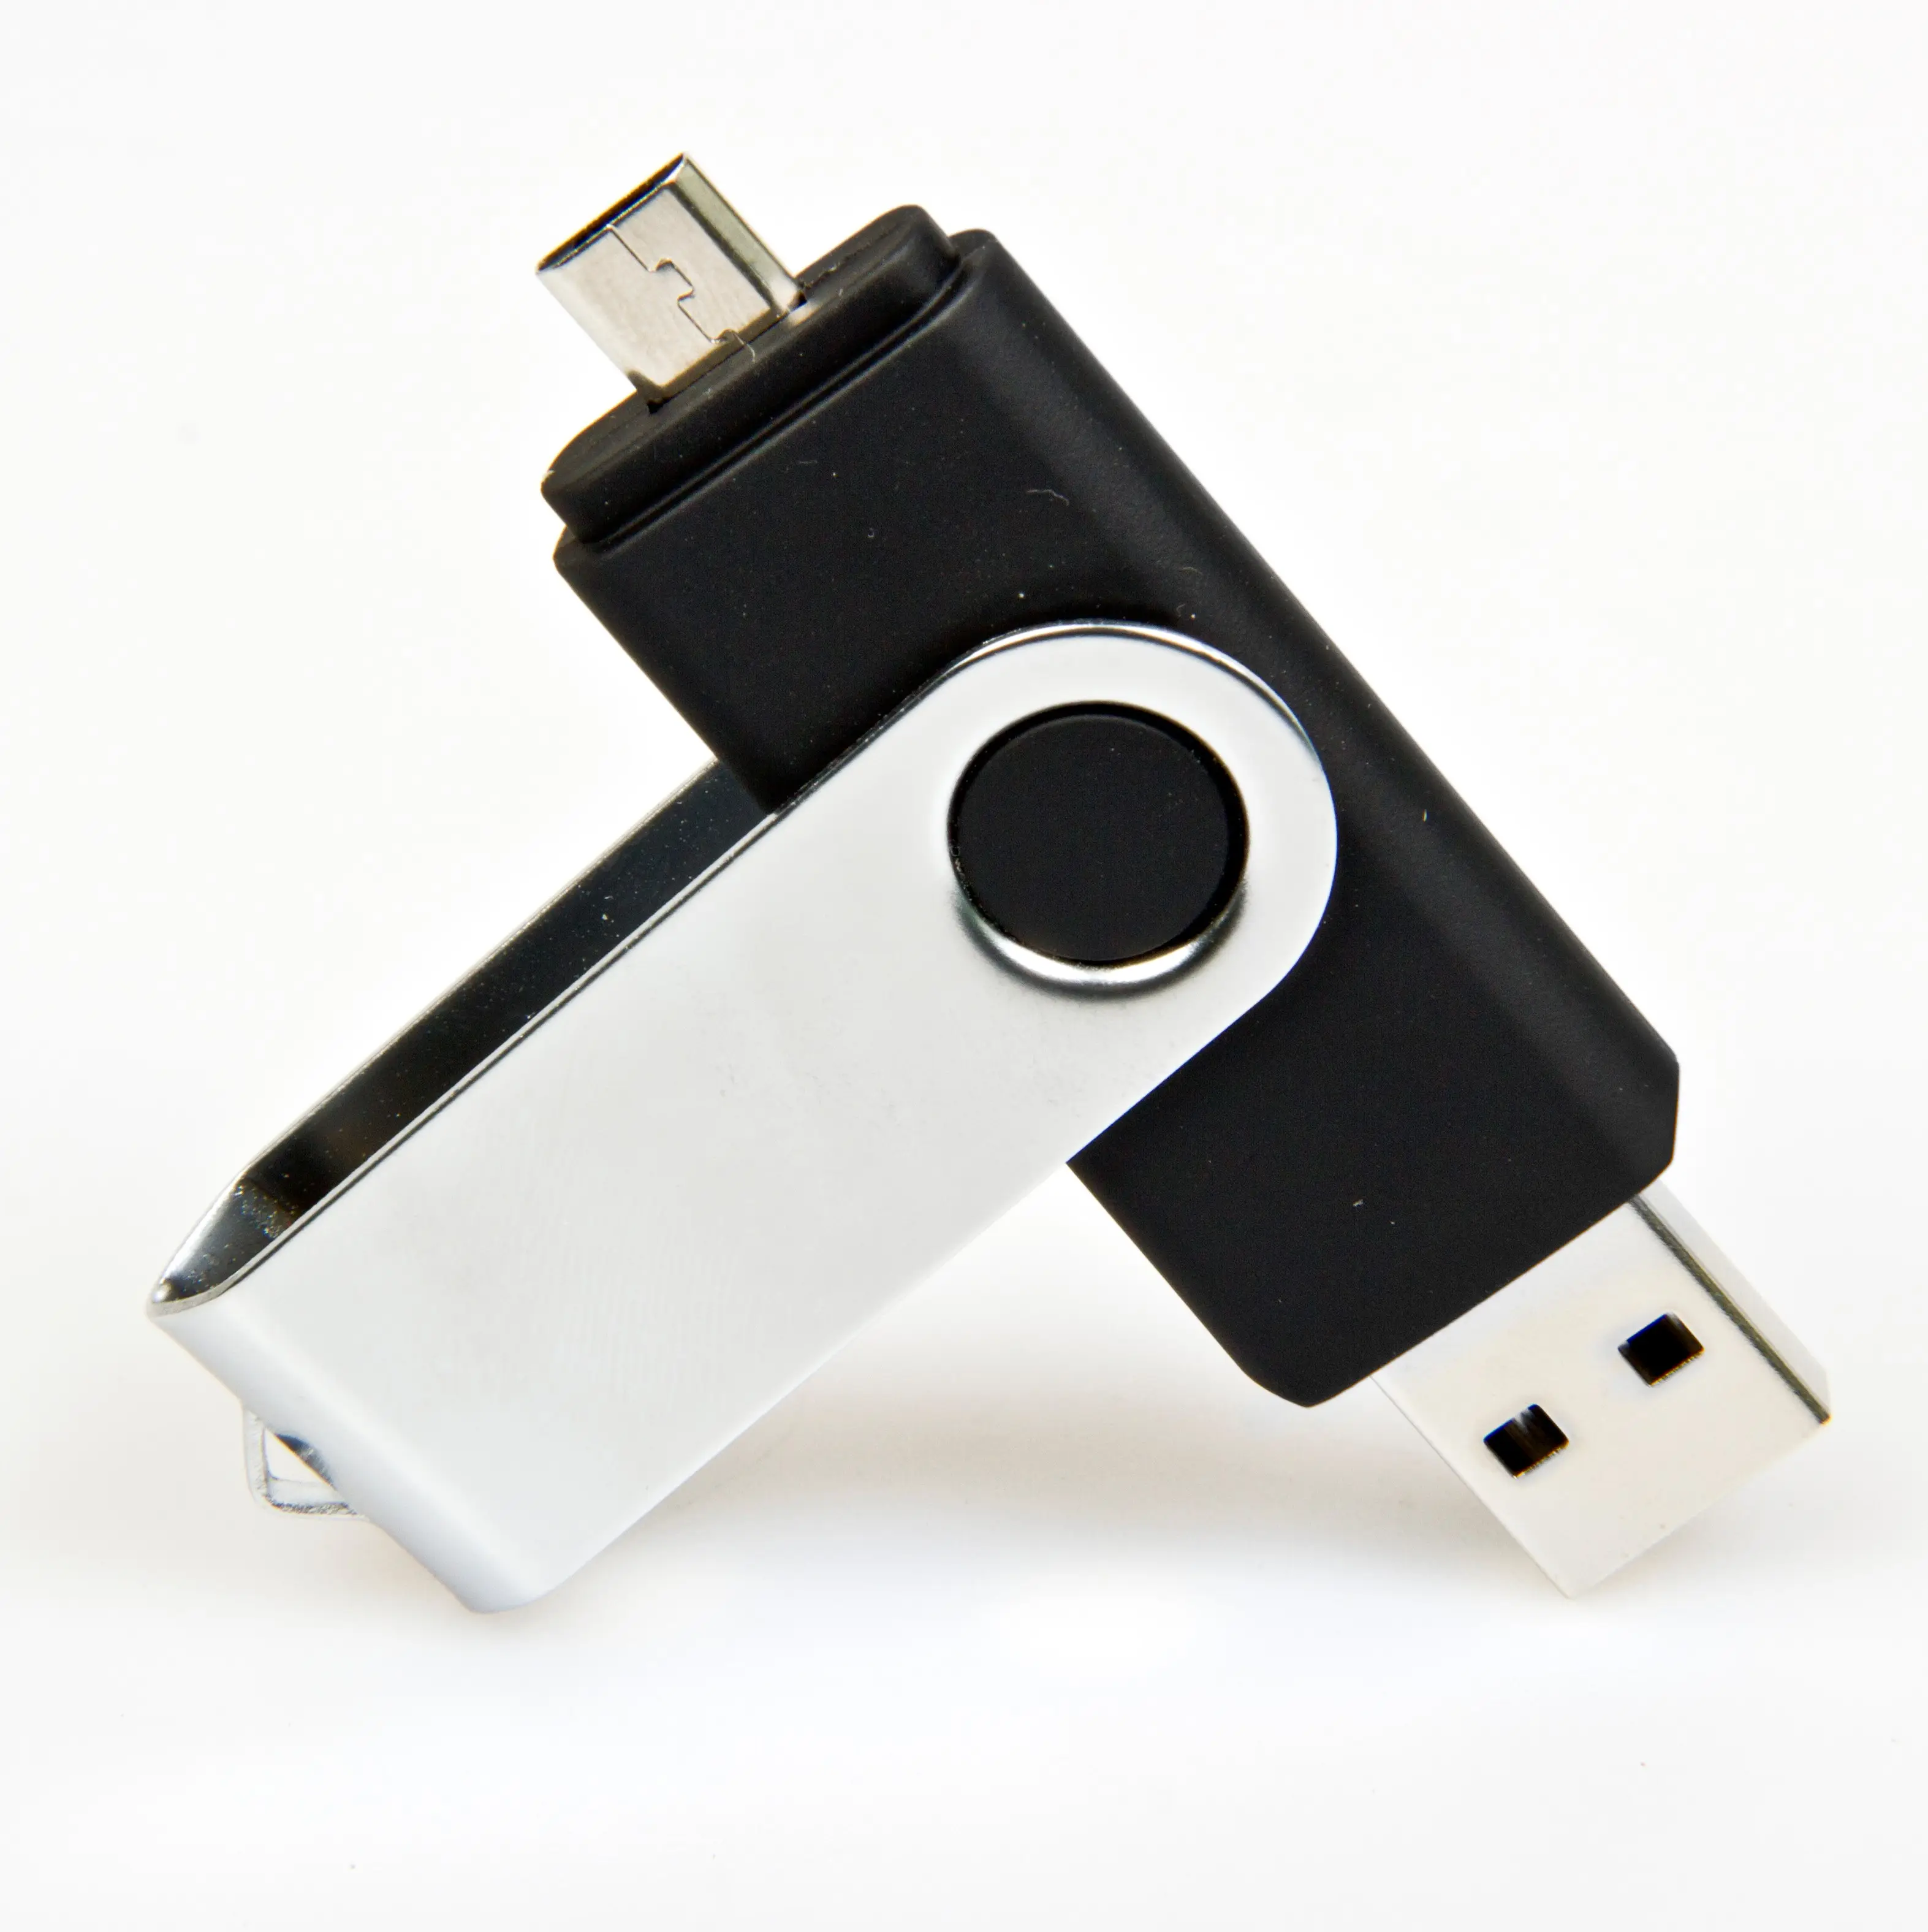 OTG USB flash drive 8GB 16GB 32GB 64GB 128GB Type C USB3.1 key for smart phone pen drive mobile memoria memory stick flash disk